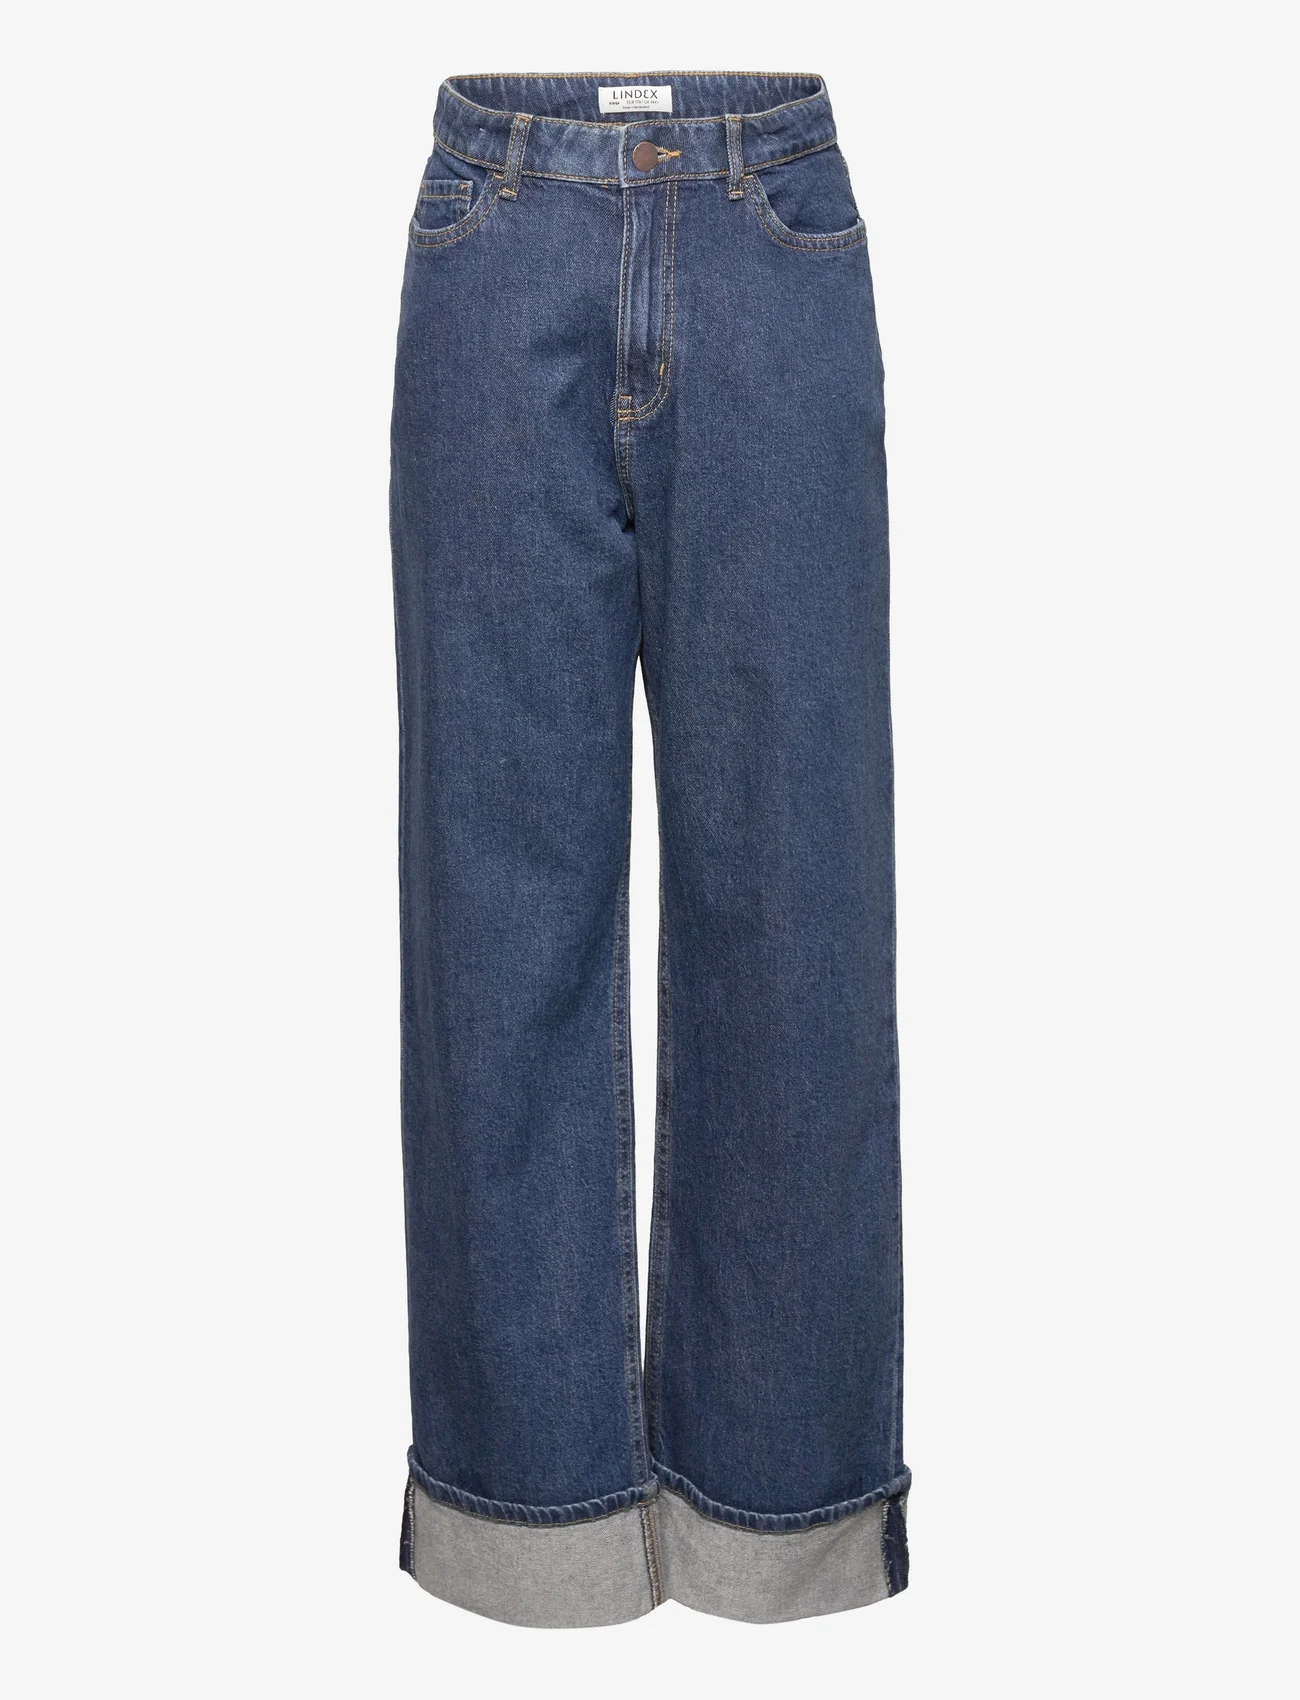 Lindex - Trousers denim Vanja folded le - loose jeans - dark denim - 0